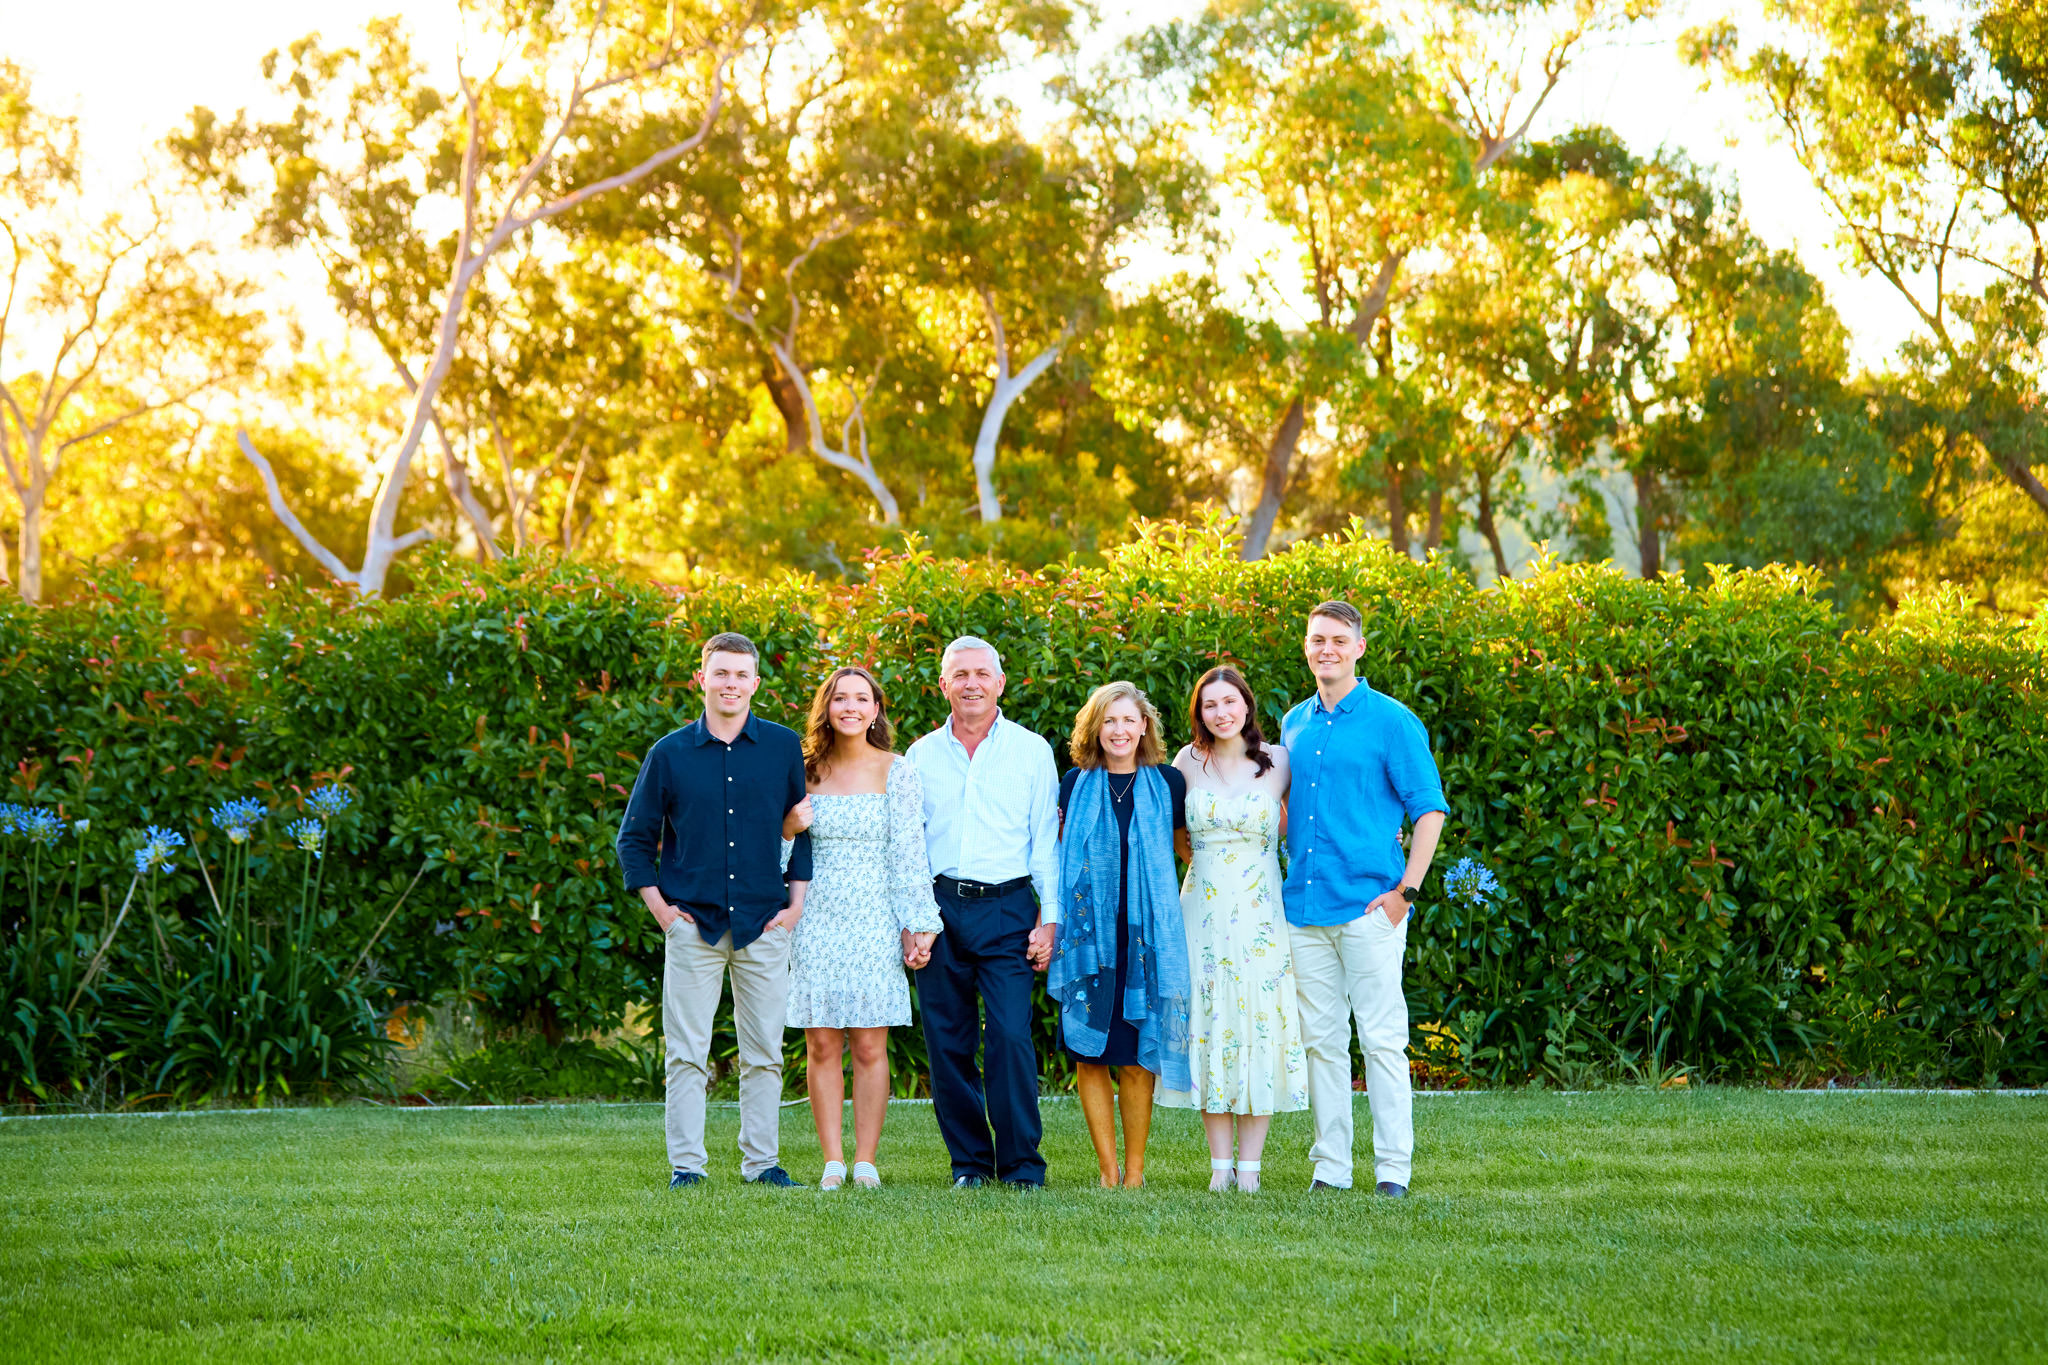 Family portrait in a Canberra garden